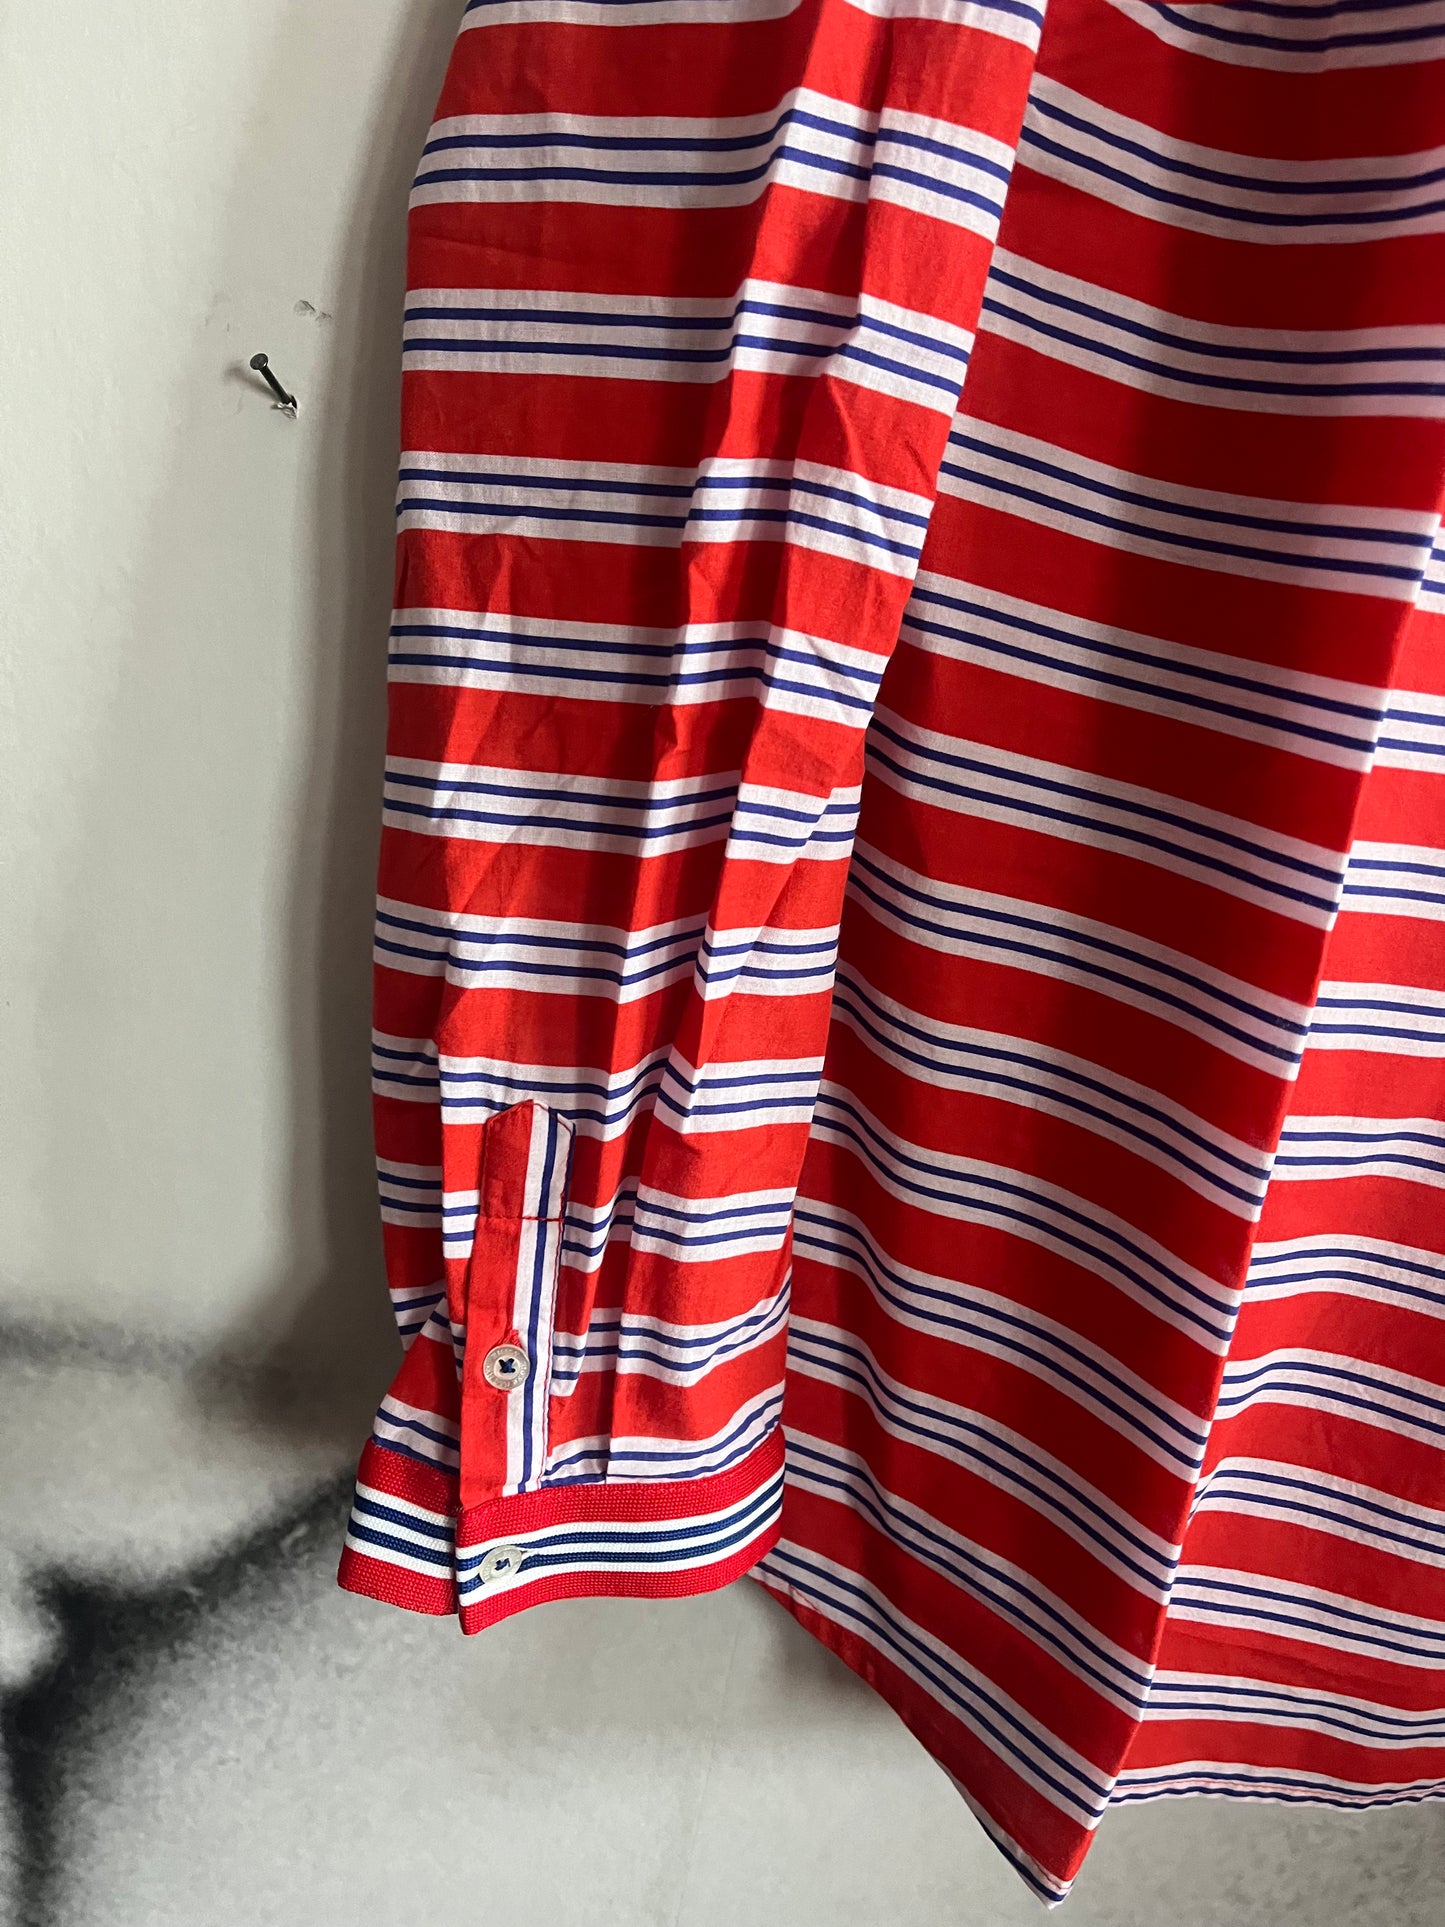 Bluse ,Azur red Stripe, Emily van den Bergh